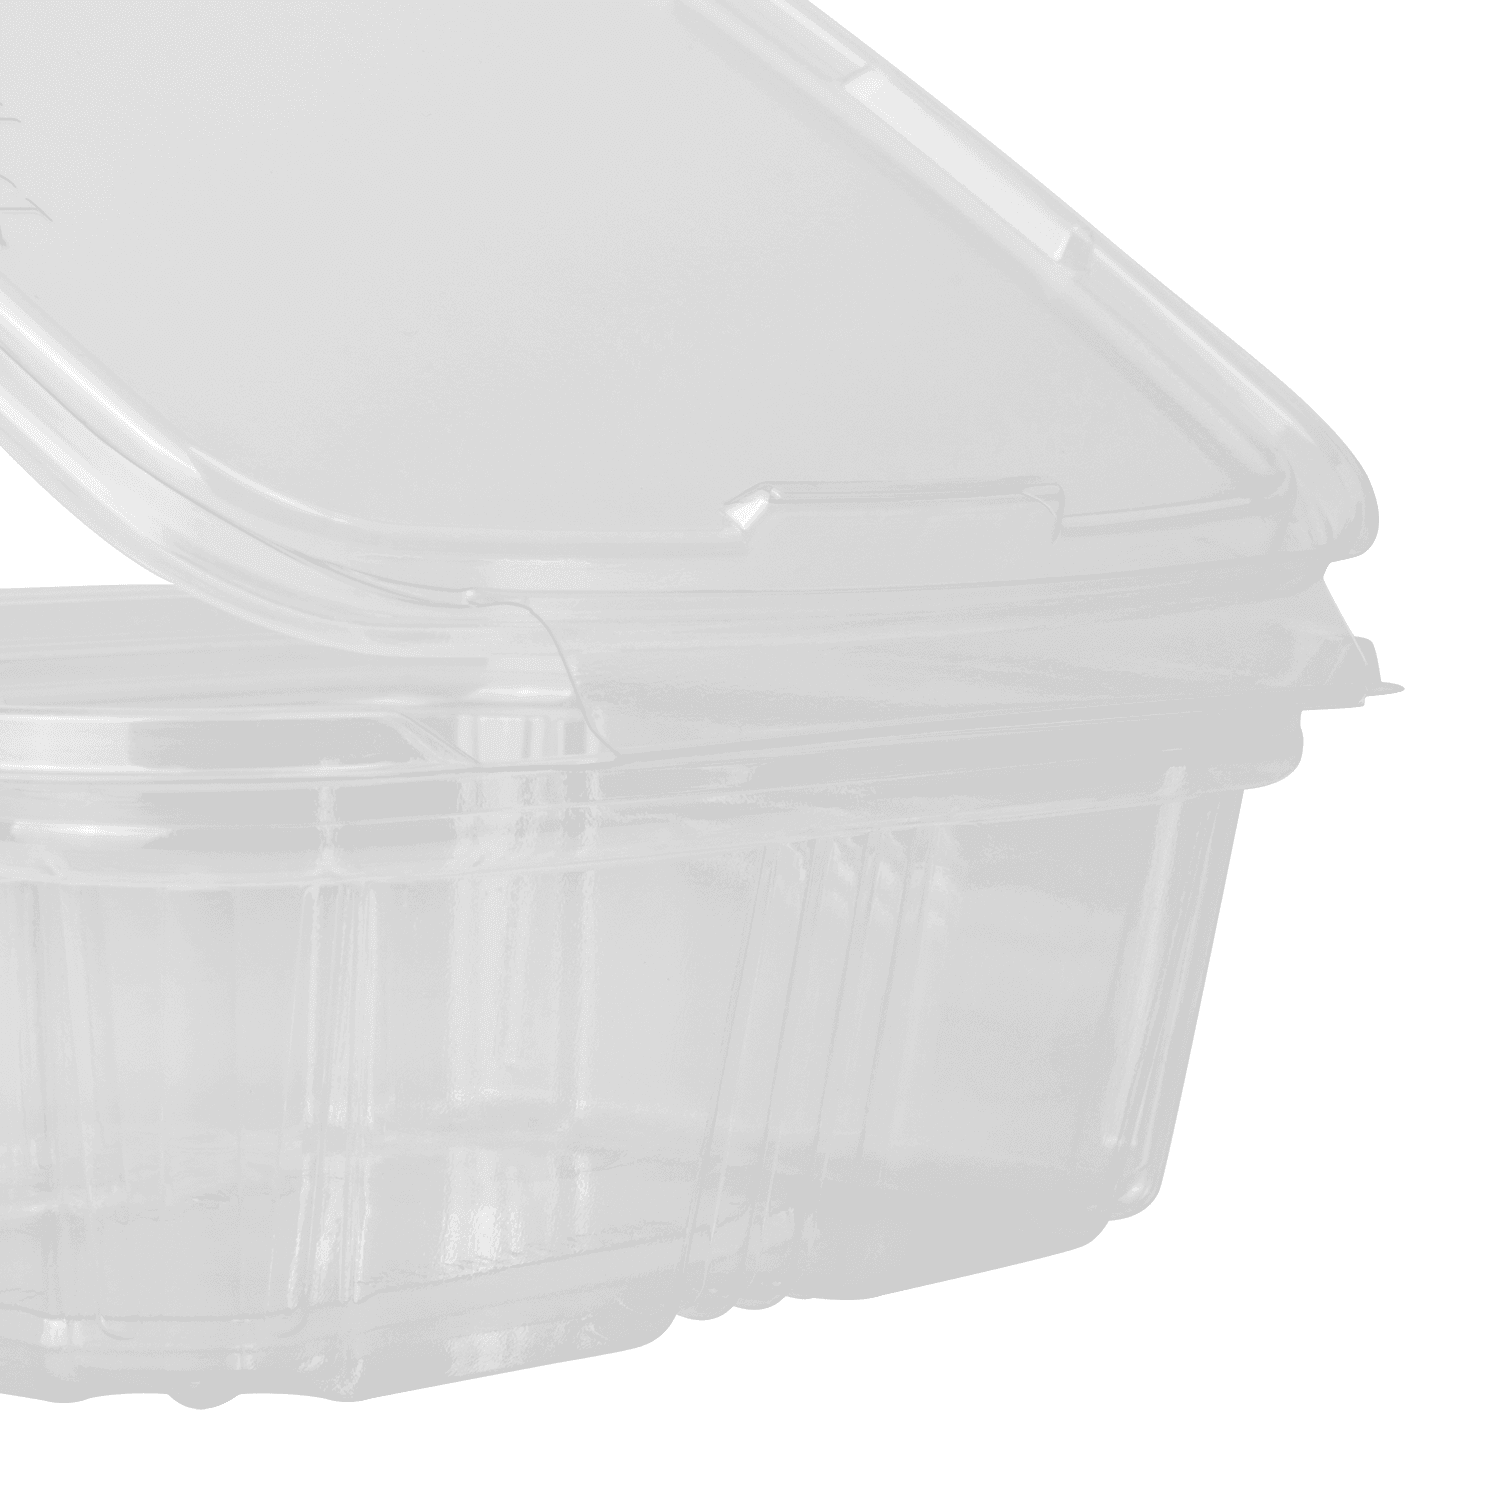 Karat 12oz PET Plastic Tamper Resistant Hinged Deli Container with